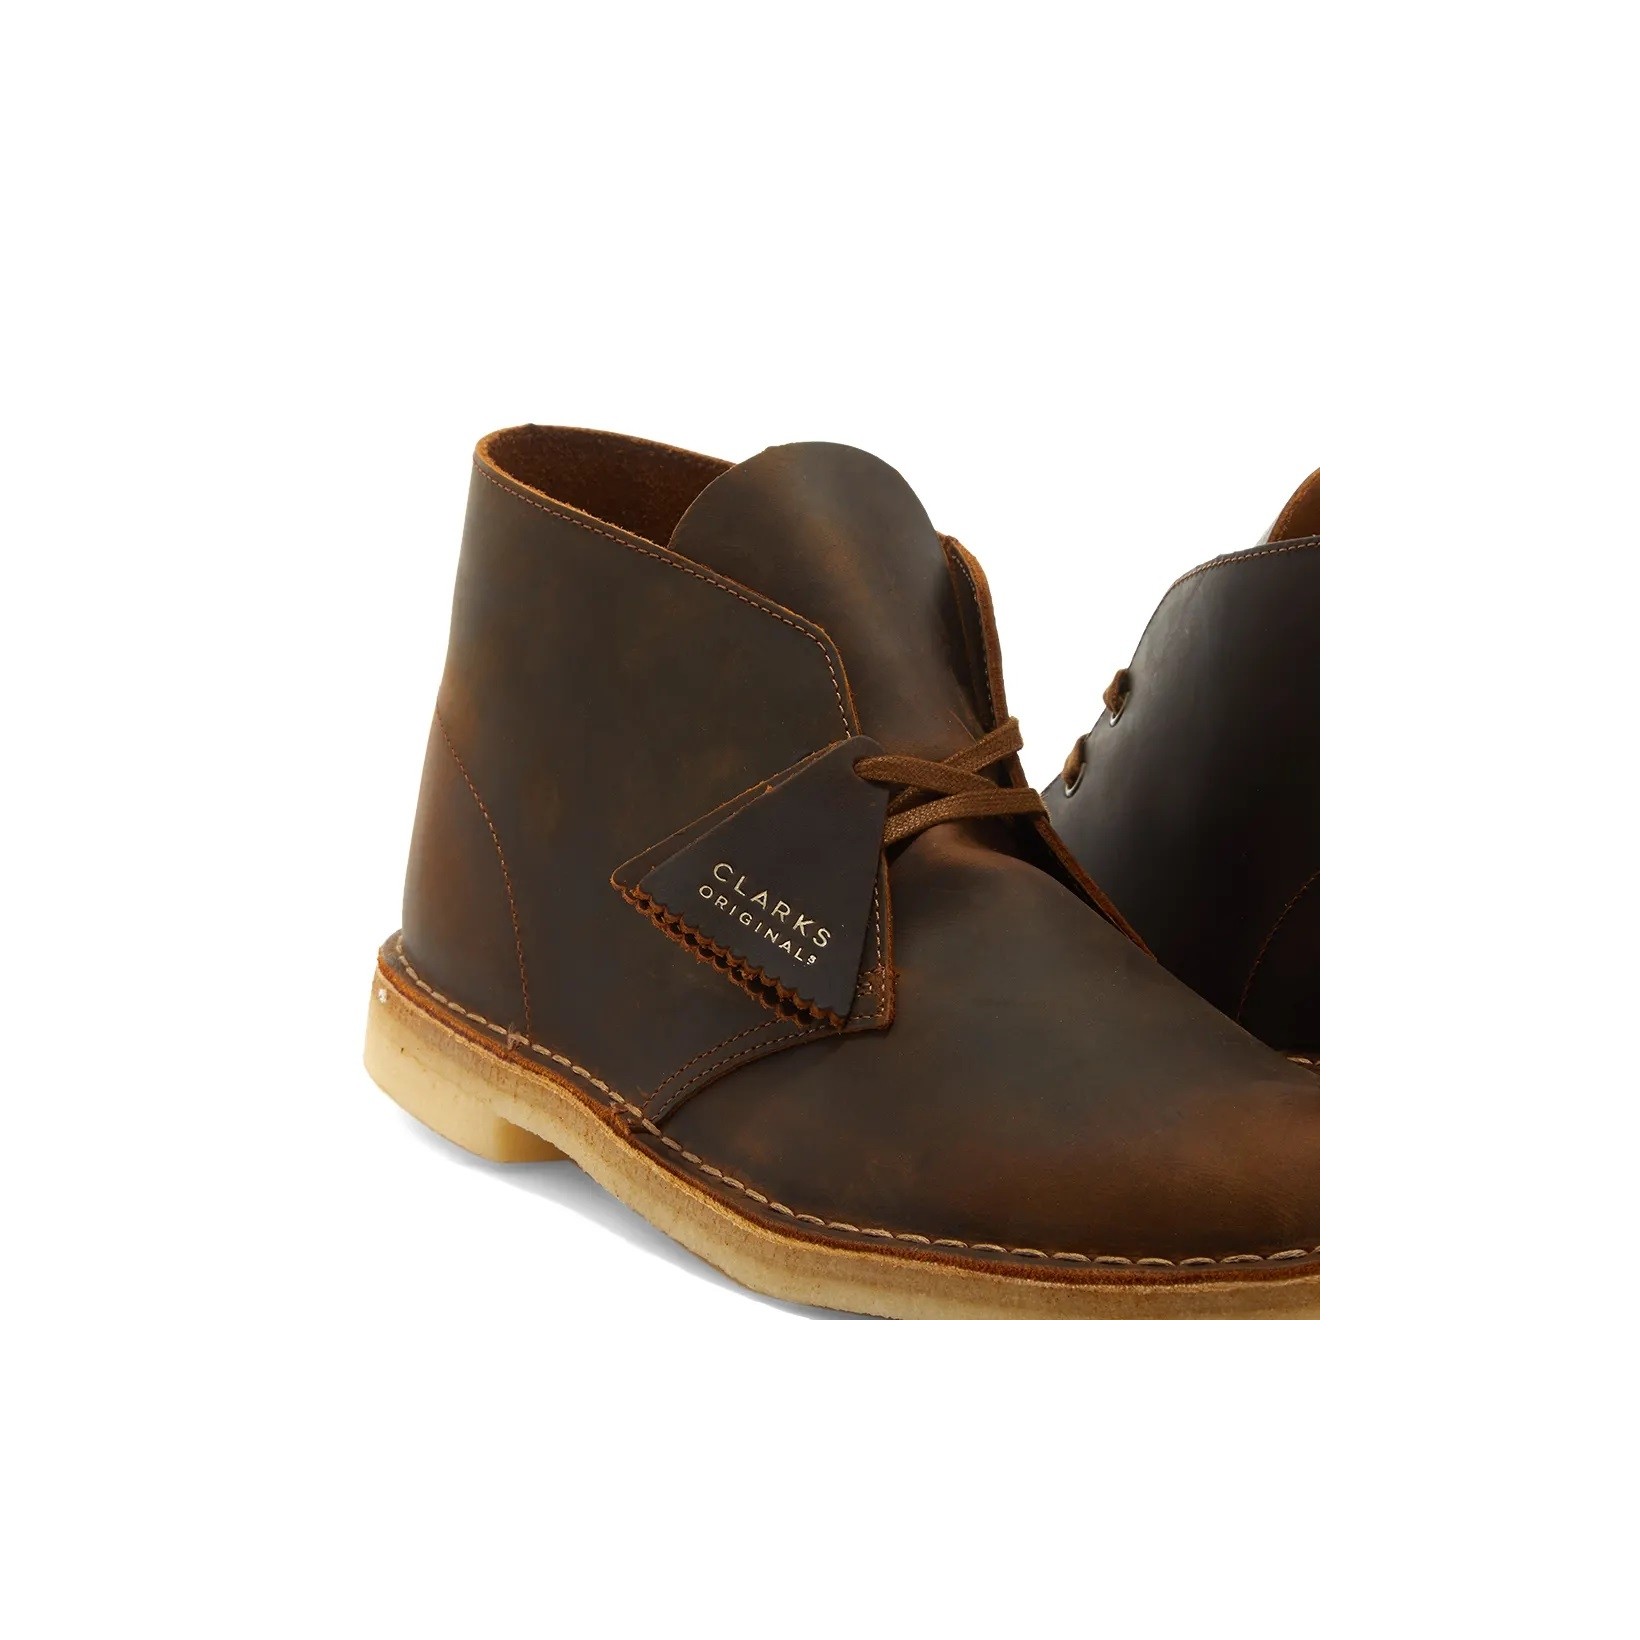 Clarks Originals Boot Beeswax Leather